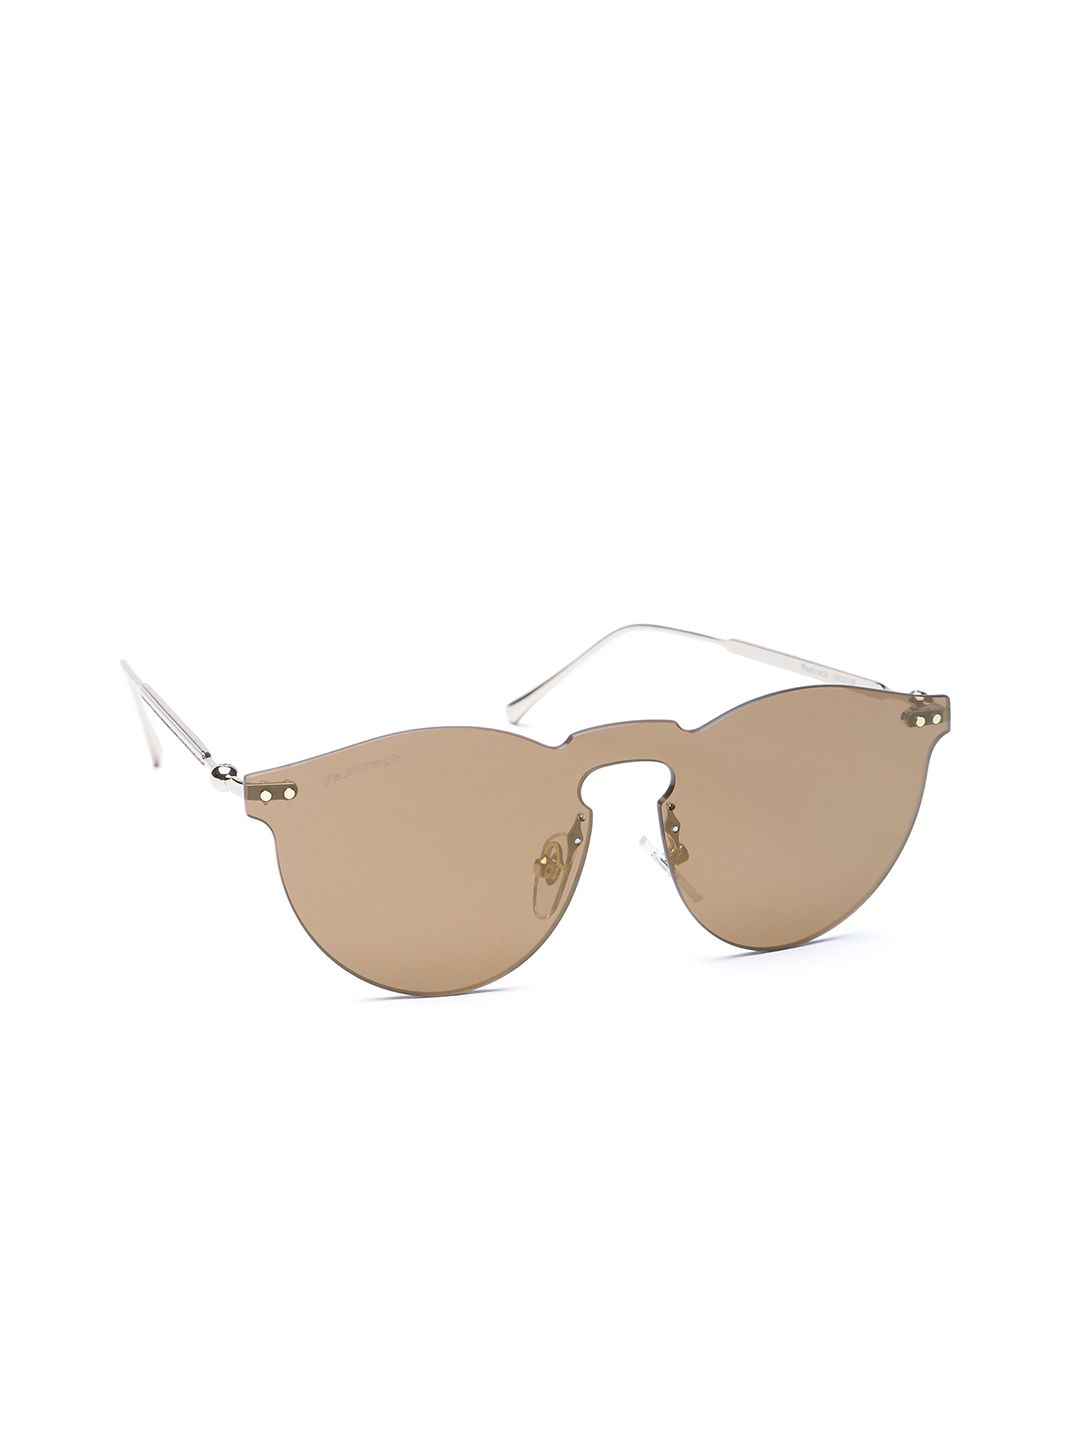 Fastrack Women Round Sunglasses U005YL5F Price in India